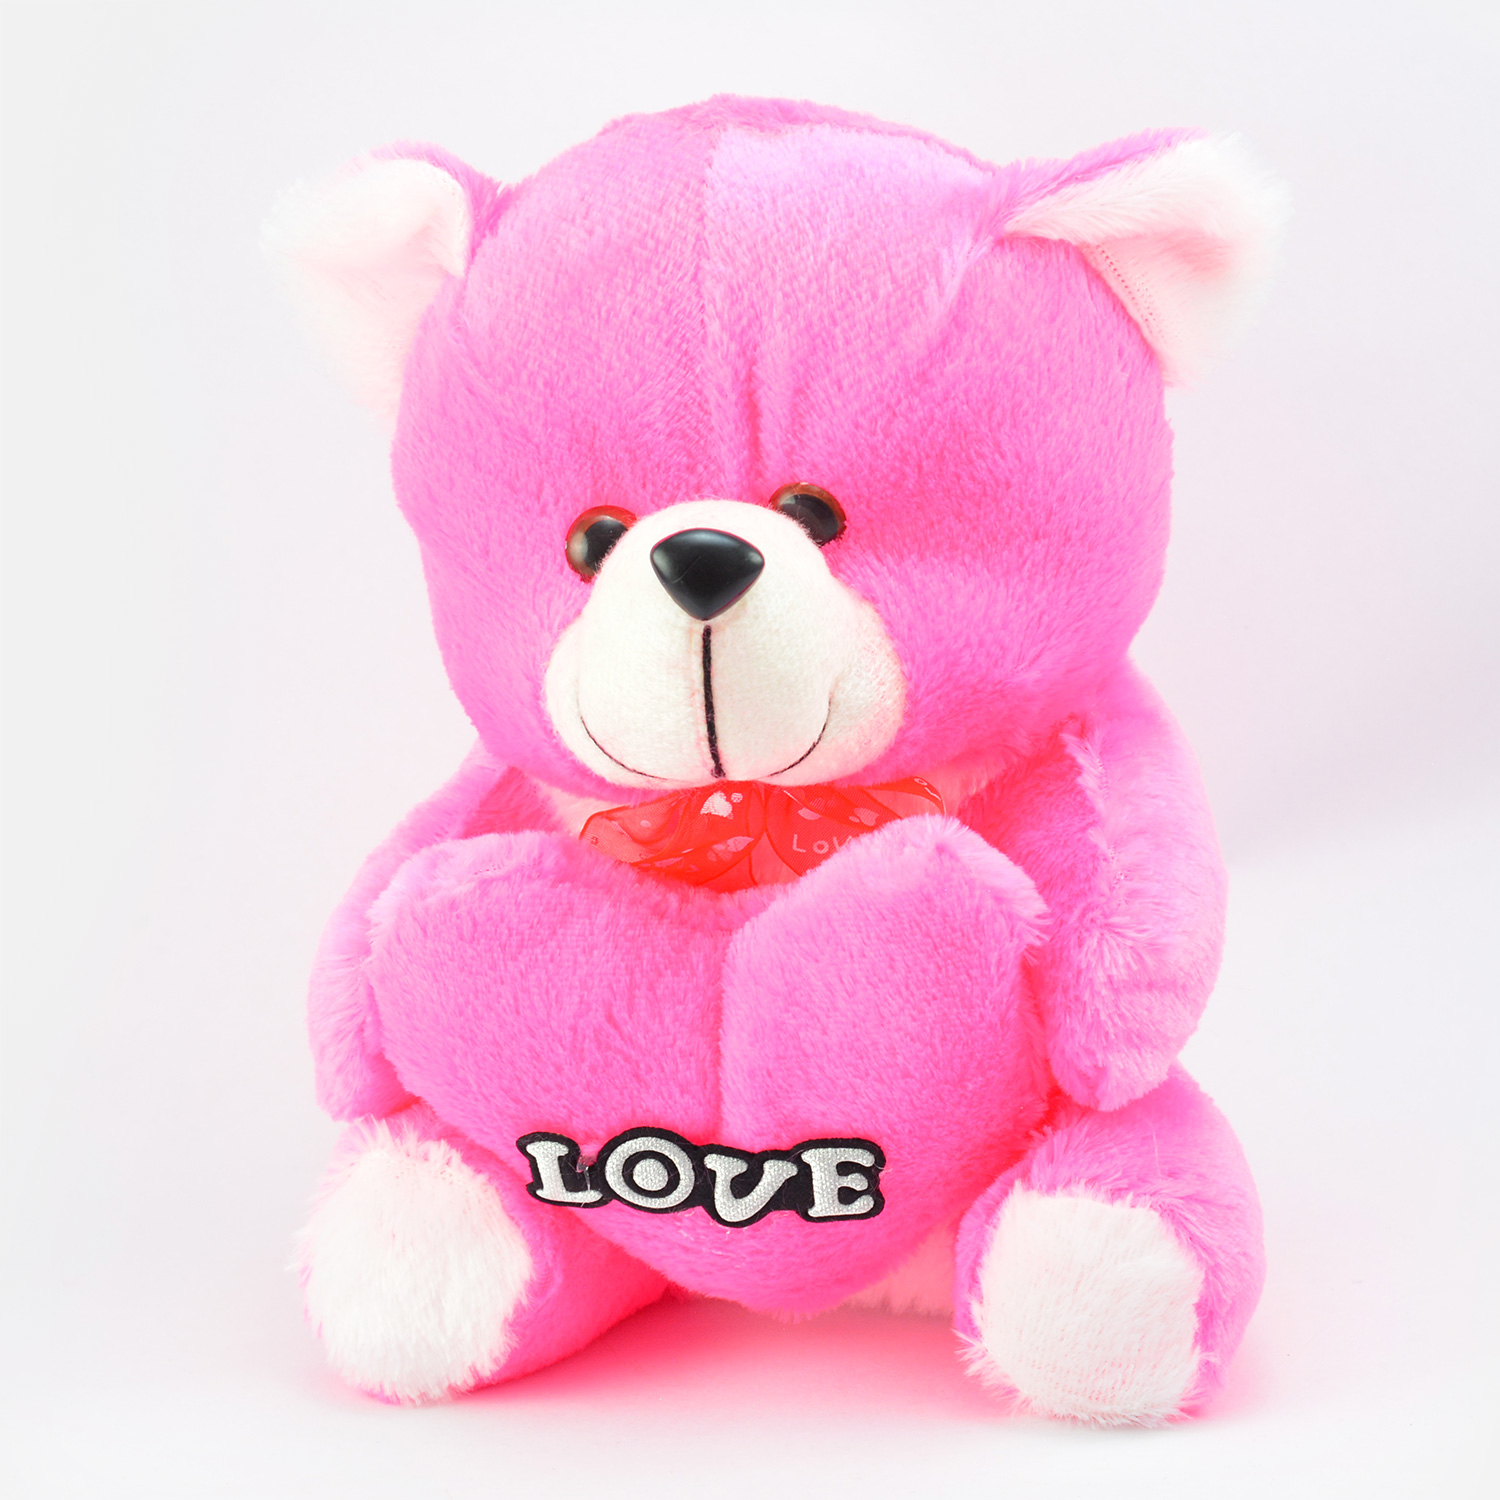 Cute Sitting Teddy Bear Soft Toy with Neck Bow